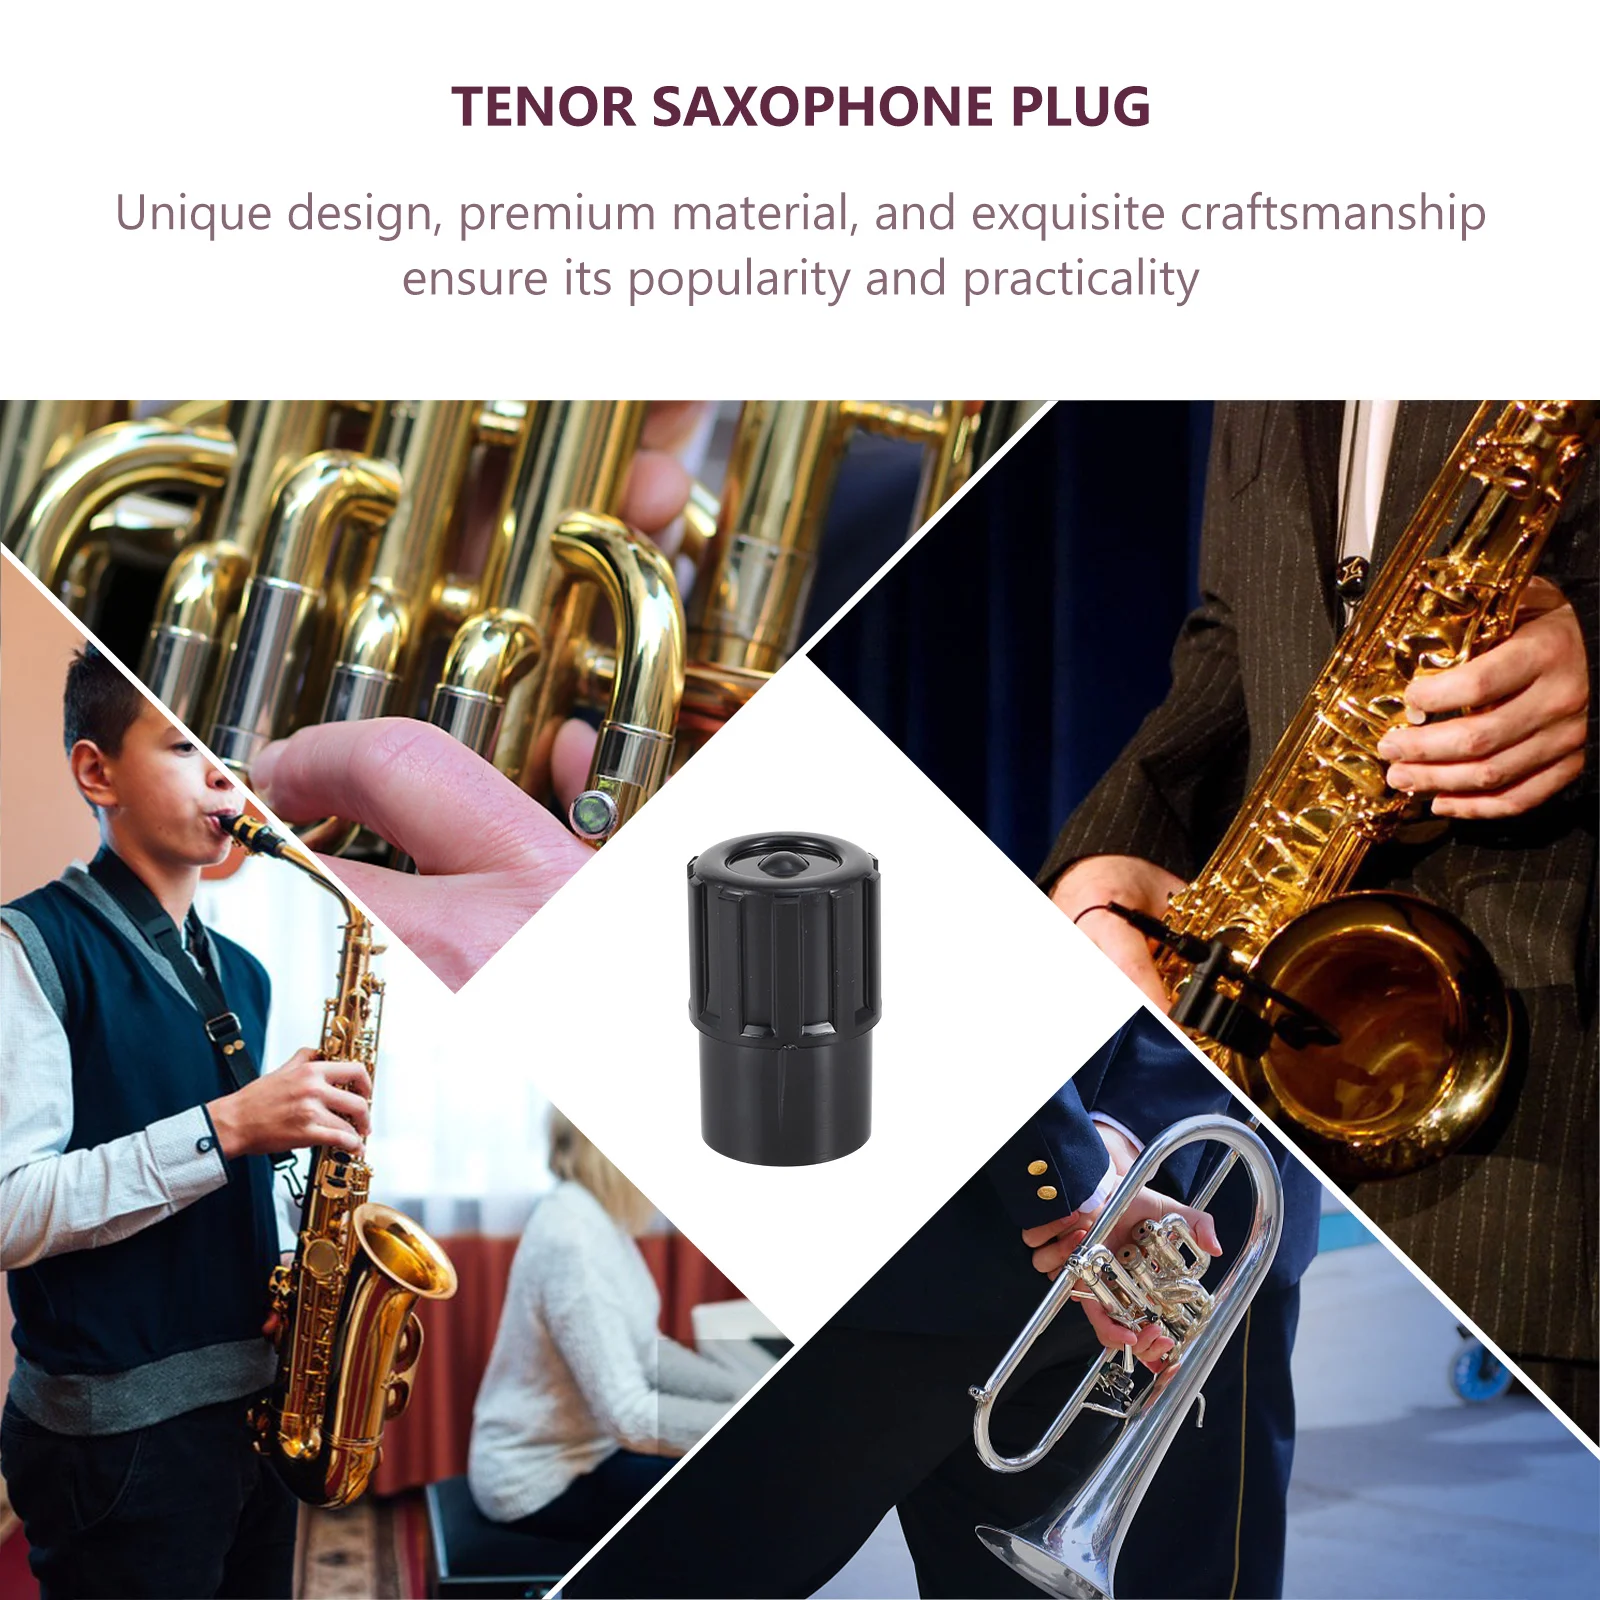 2Pcs Plug Tenor Saxophone Plug Saxophone Plug Sax Protector Sax Stopper for Musician Gift enlarge